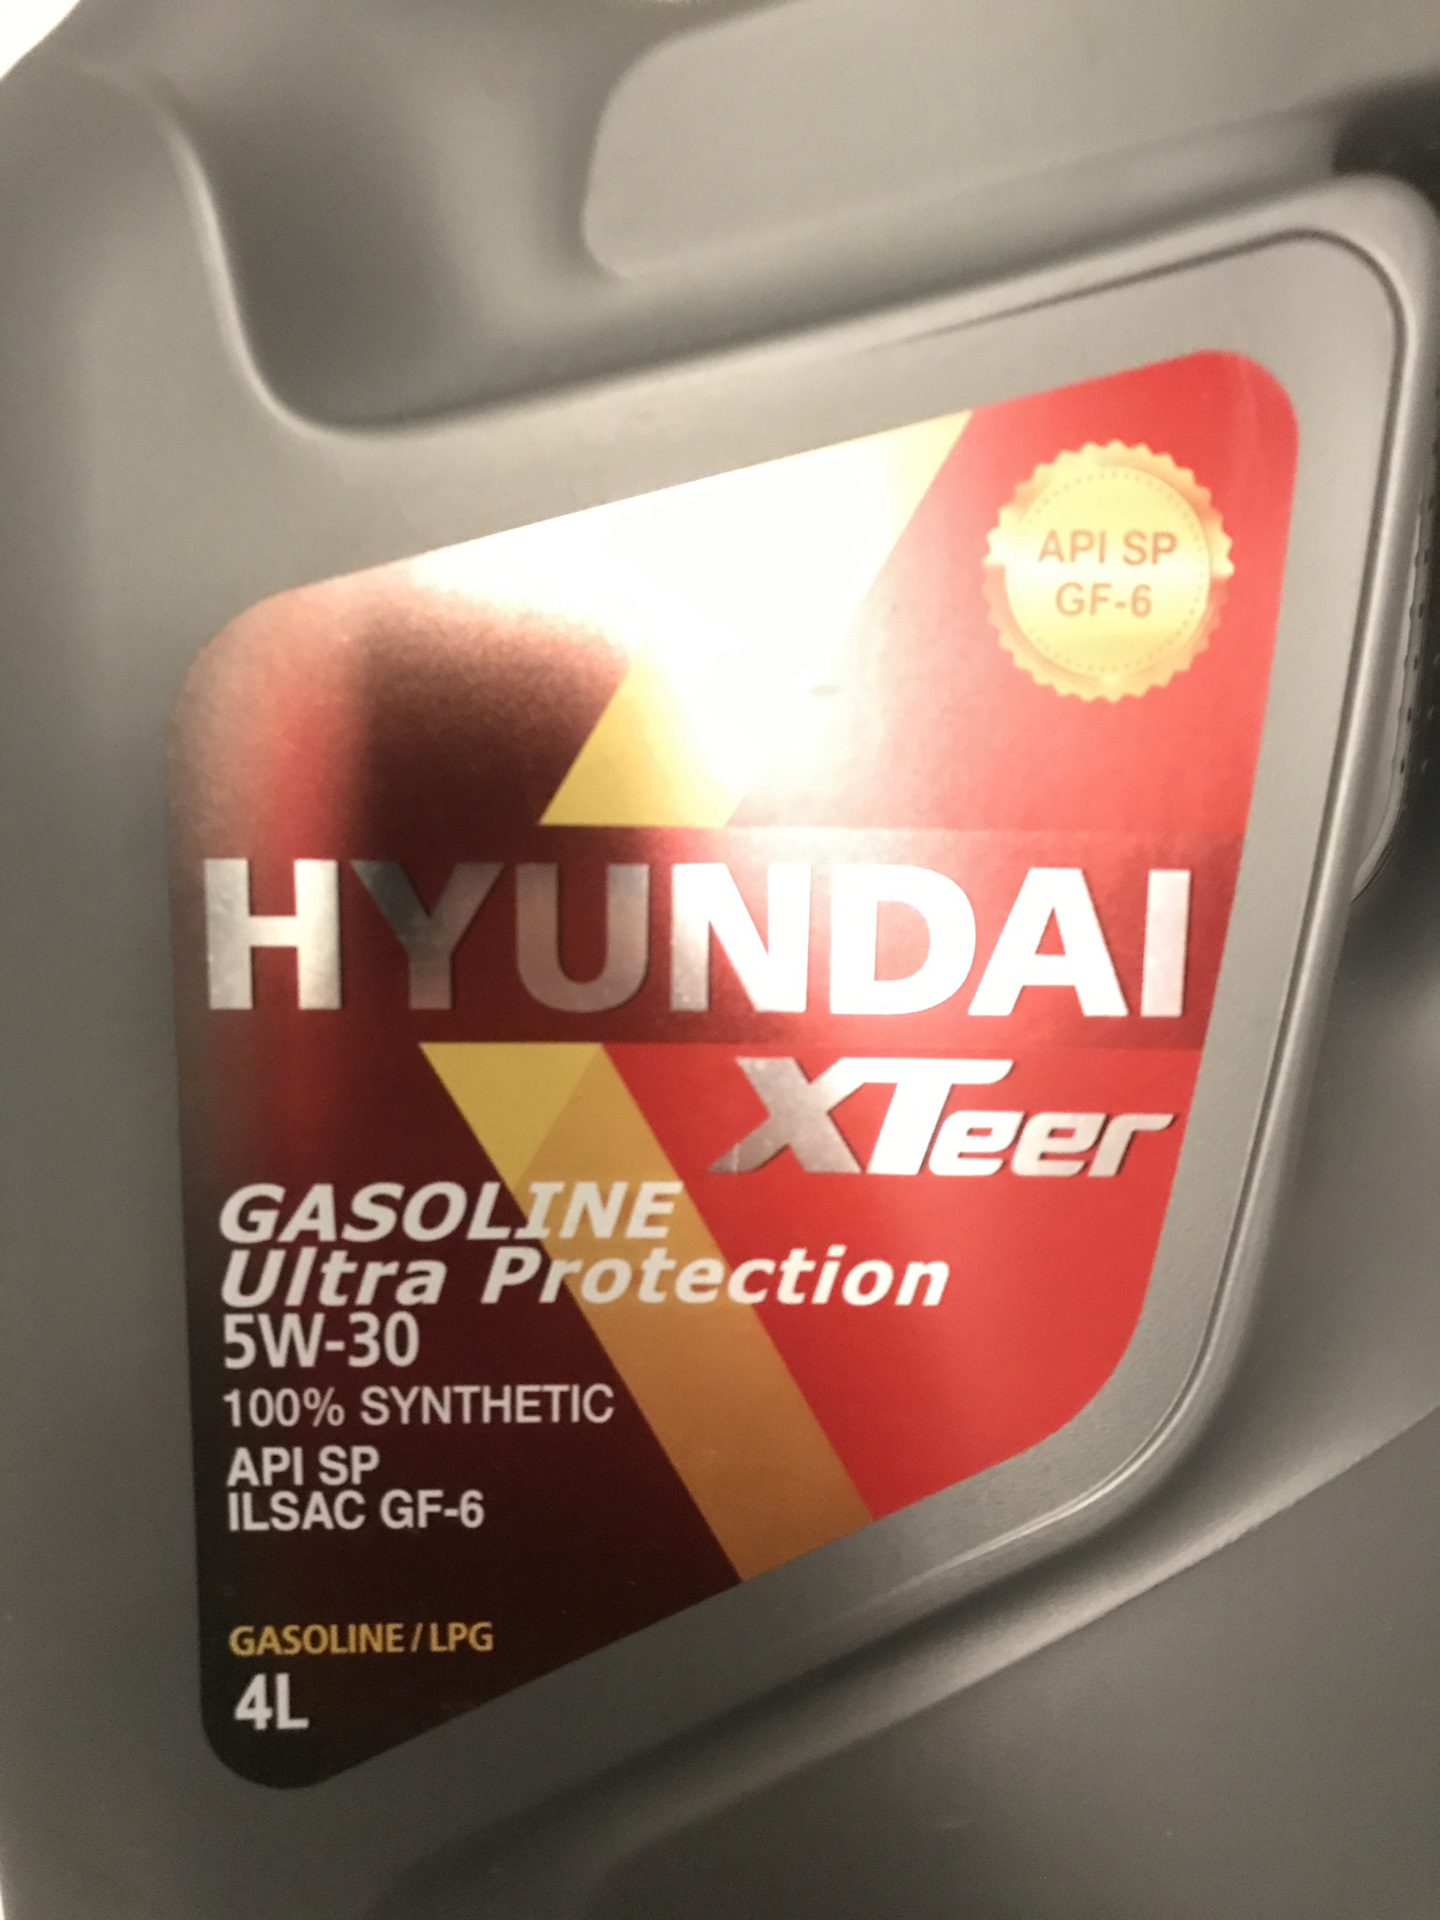 Hyundai xteer gasoline ultra 5w30. XTEER gasoline Ultra Protection 5w30 200л.